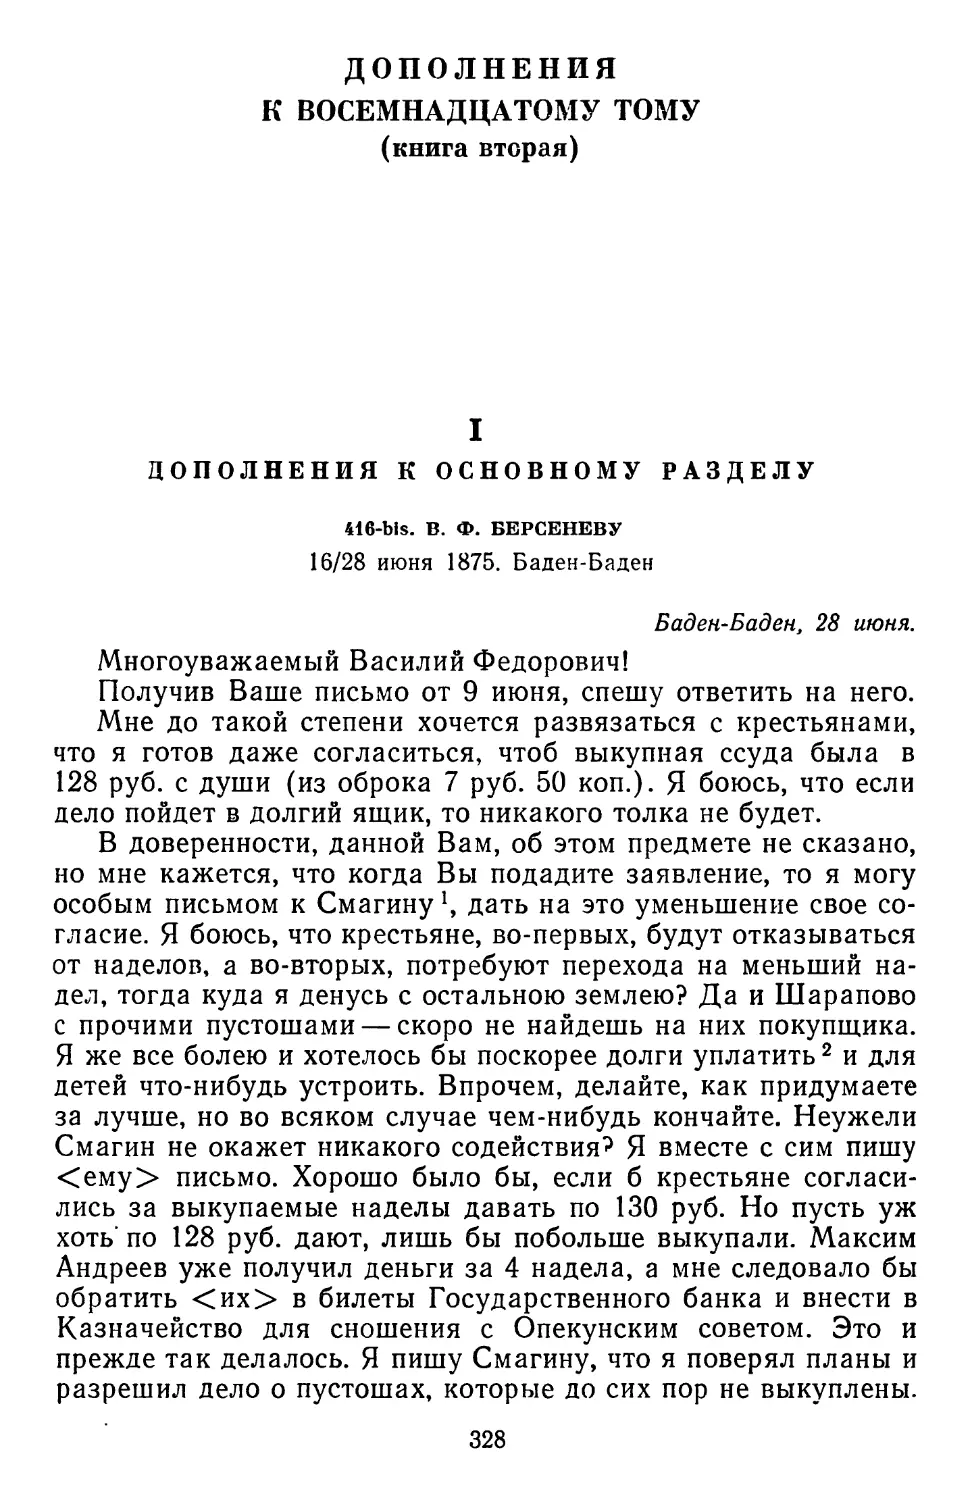 I.Дополнения к основному разделу 416-bis. В. Ф. Берсеневу. 16/28 июня 1875. Баден-Баден